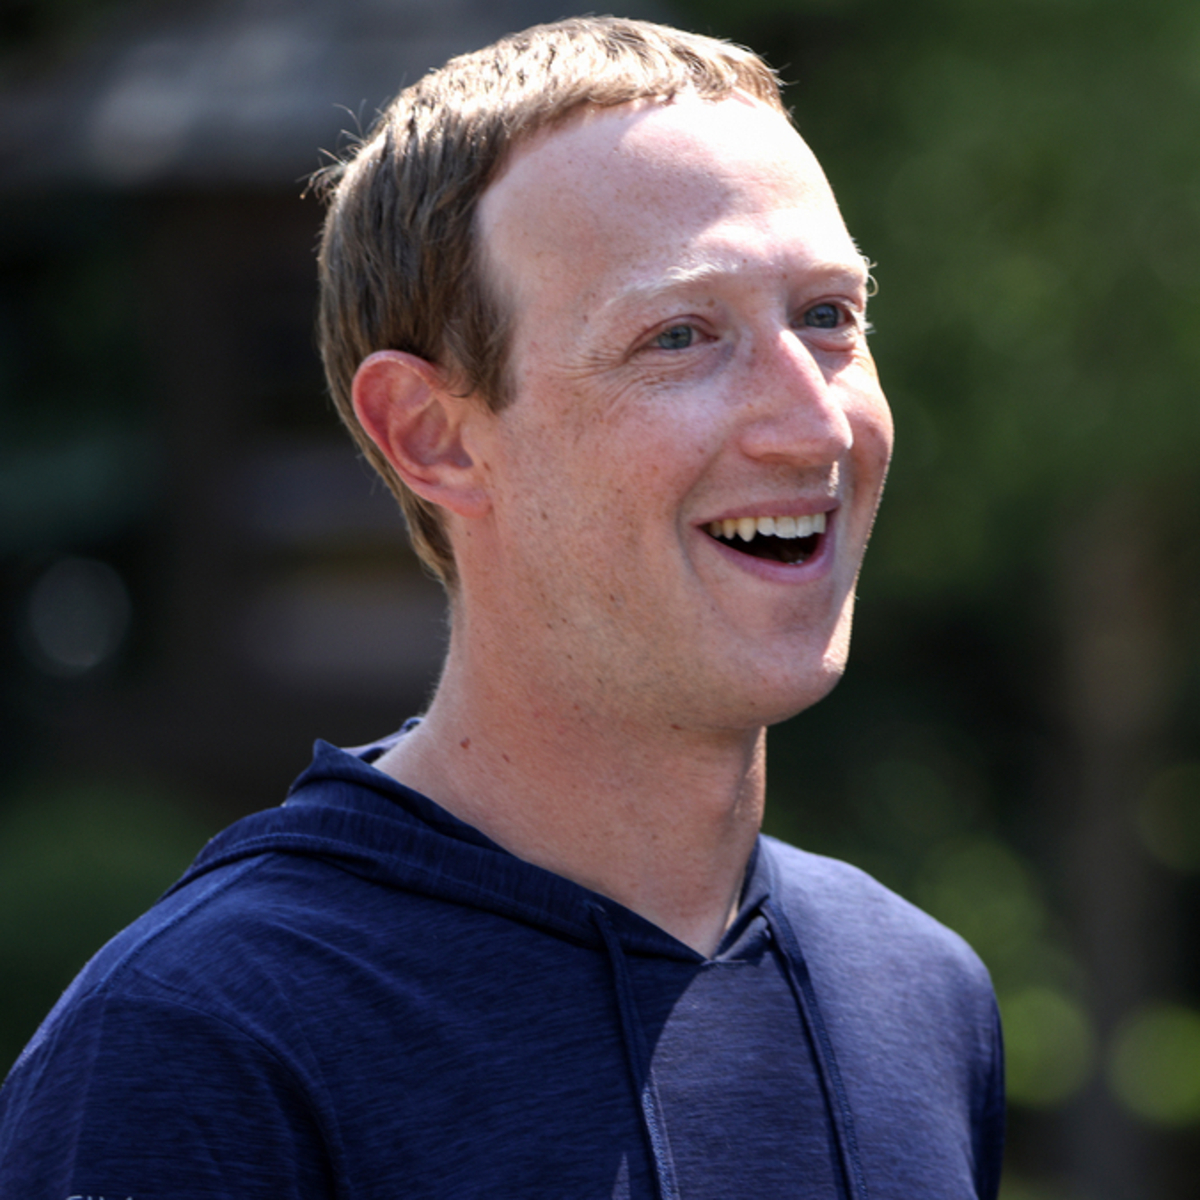 Mark Zuckerberg Reveals He Eats 4,000 Calories Per Day